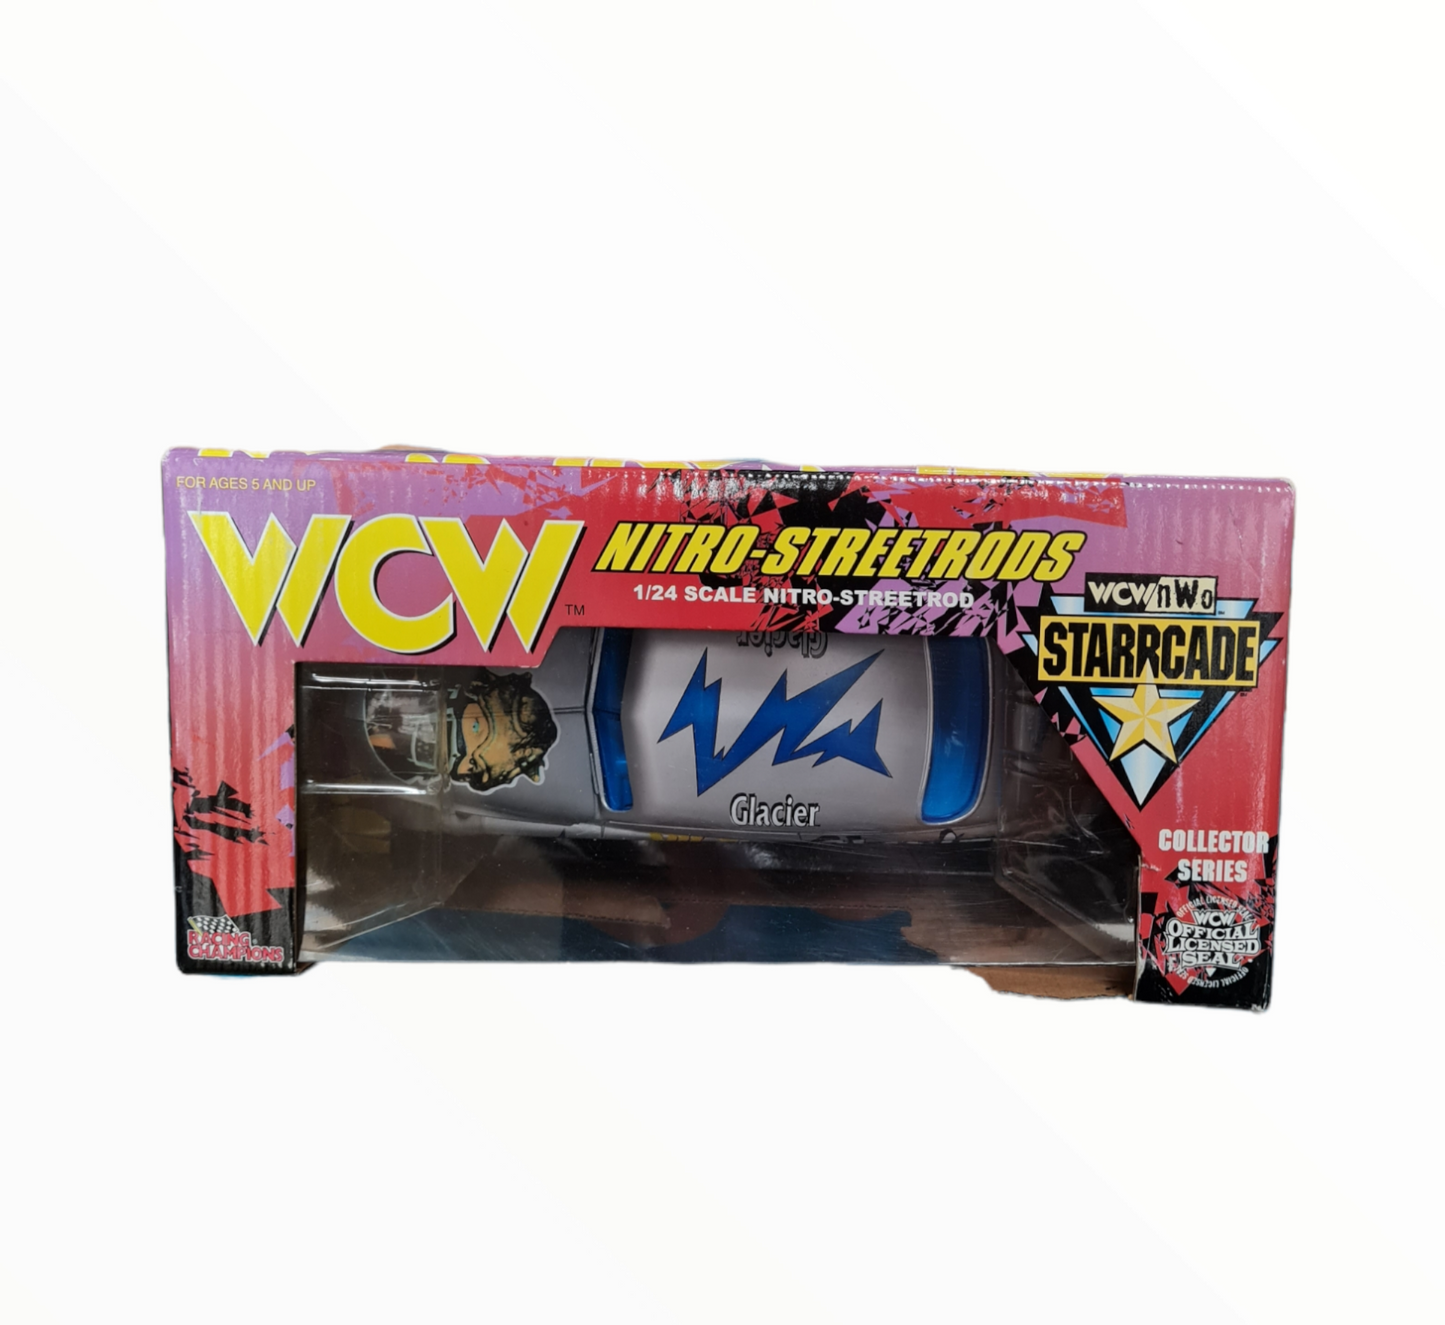 WCW Nitro Streetrods Glacier Limited Edition 1 of 4998.